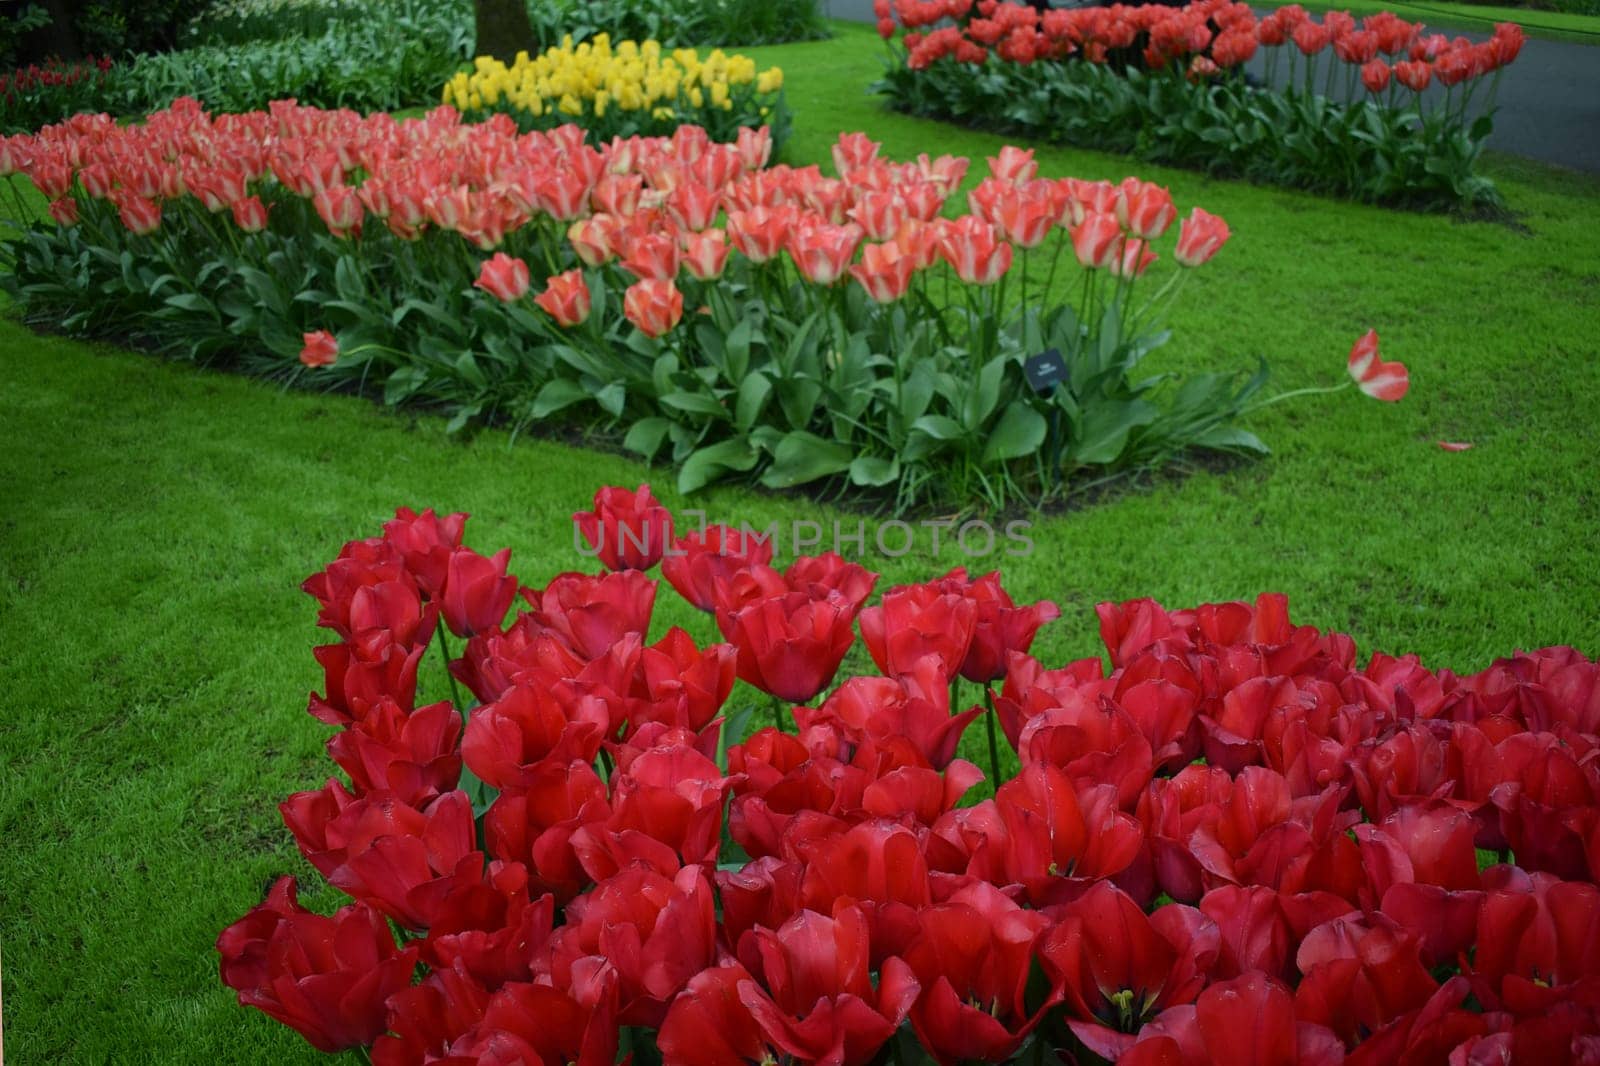 Field with beautiful multicolored tulips by artemisagajda